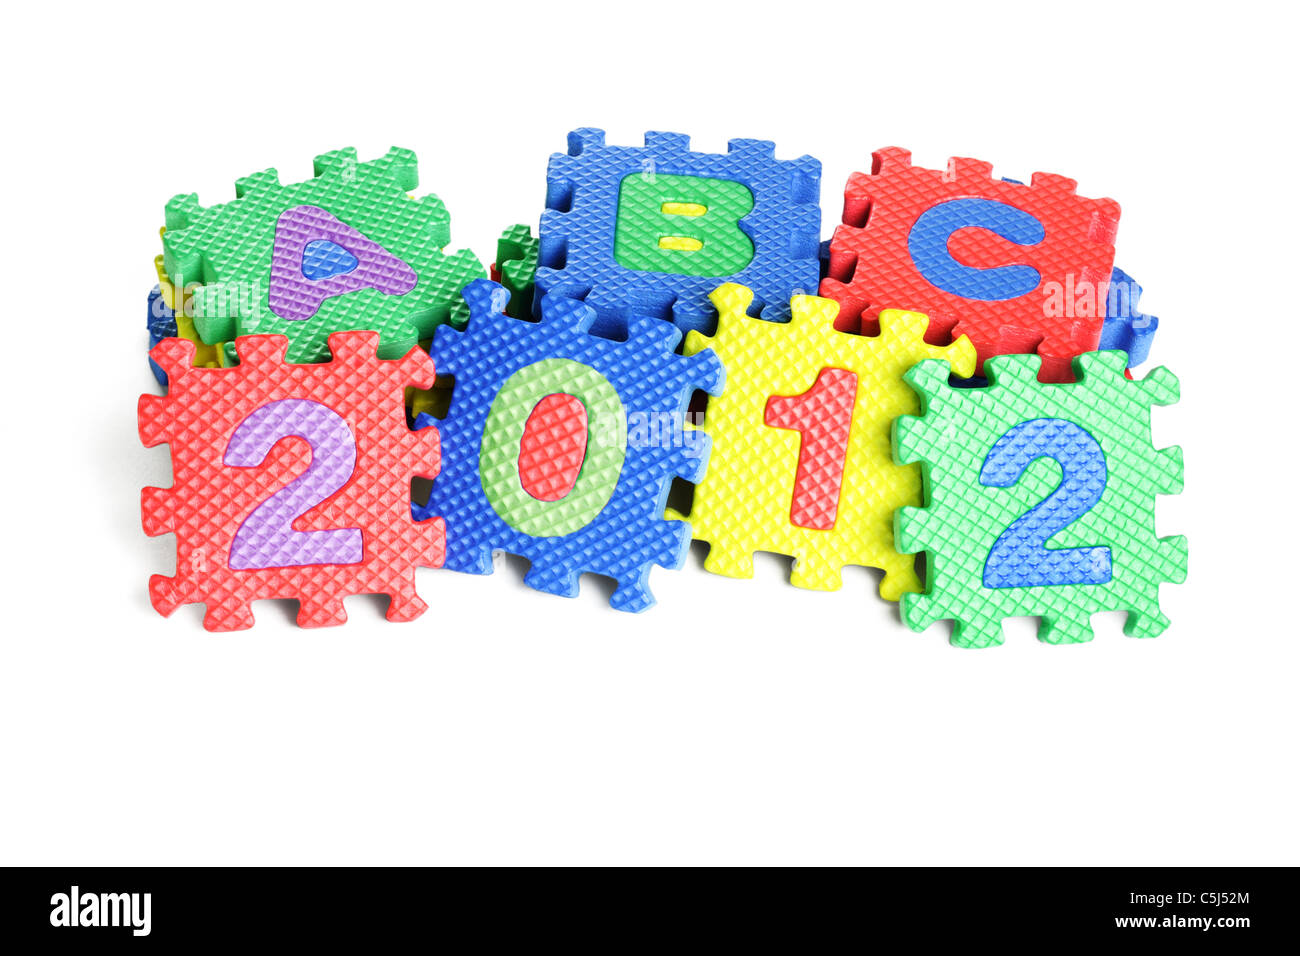 2012 new year and ABC colorful interlocking foam blocks on white background Stock Photo